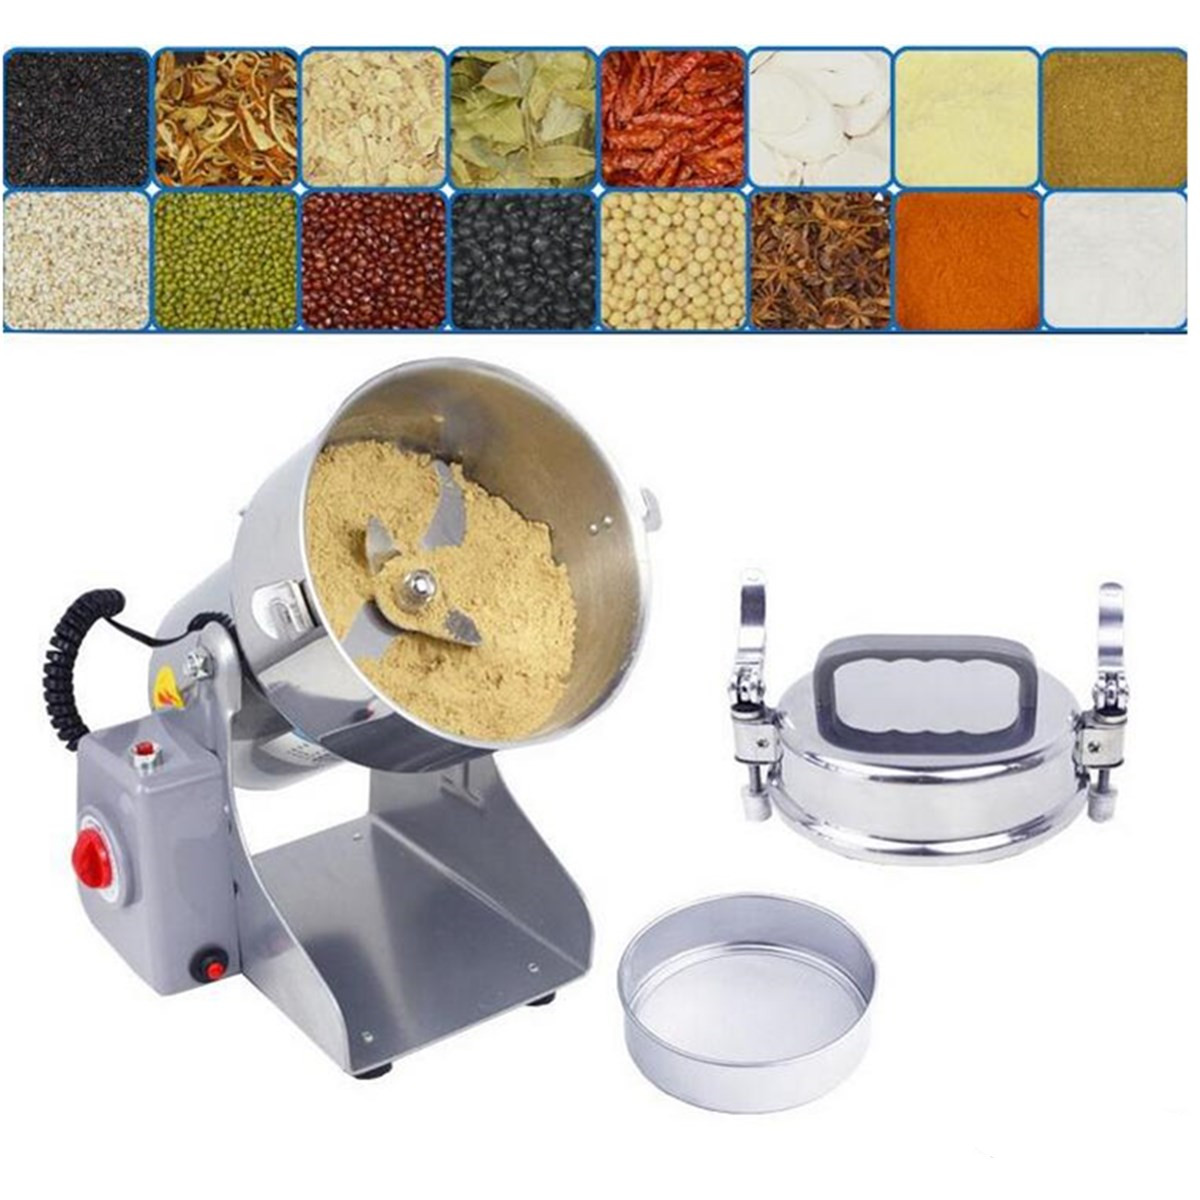 700g-Electric-Grains-Spices-Hebals-Cereal-Dry-Food-Grinder-Mill-Grinding-Machine-Blender-1361102